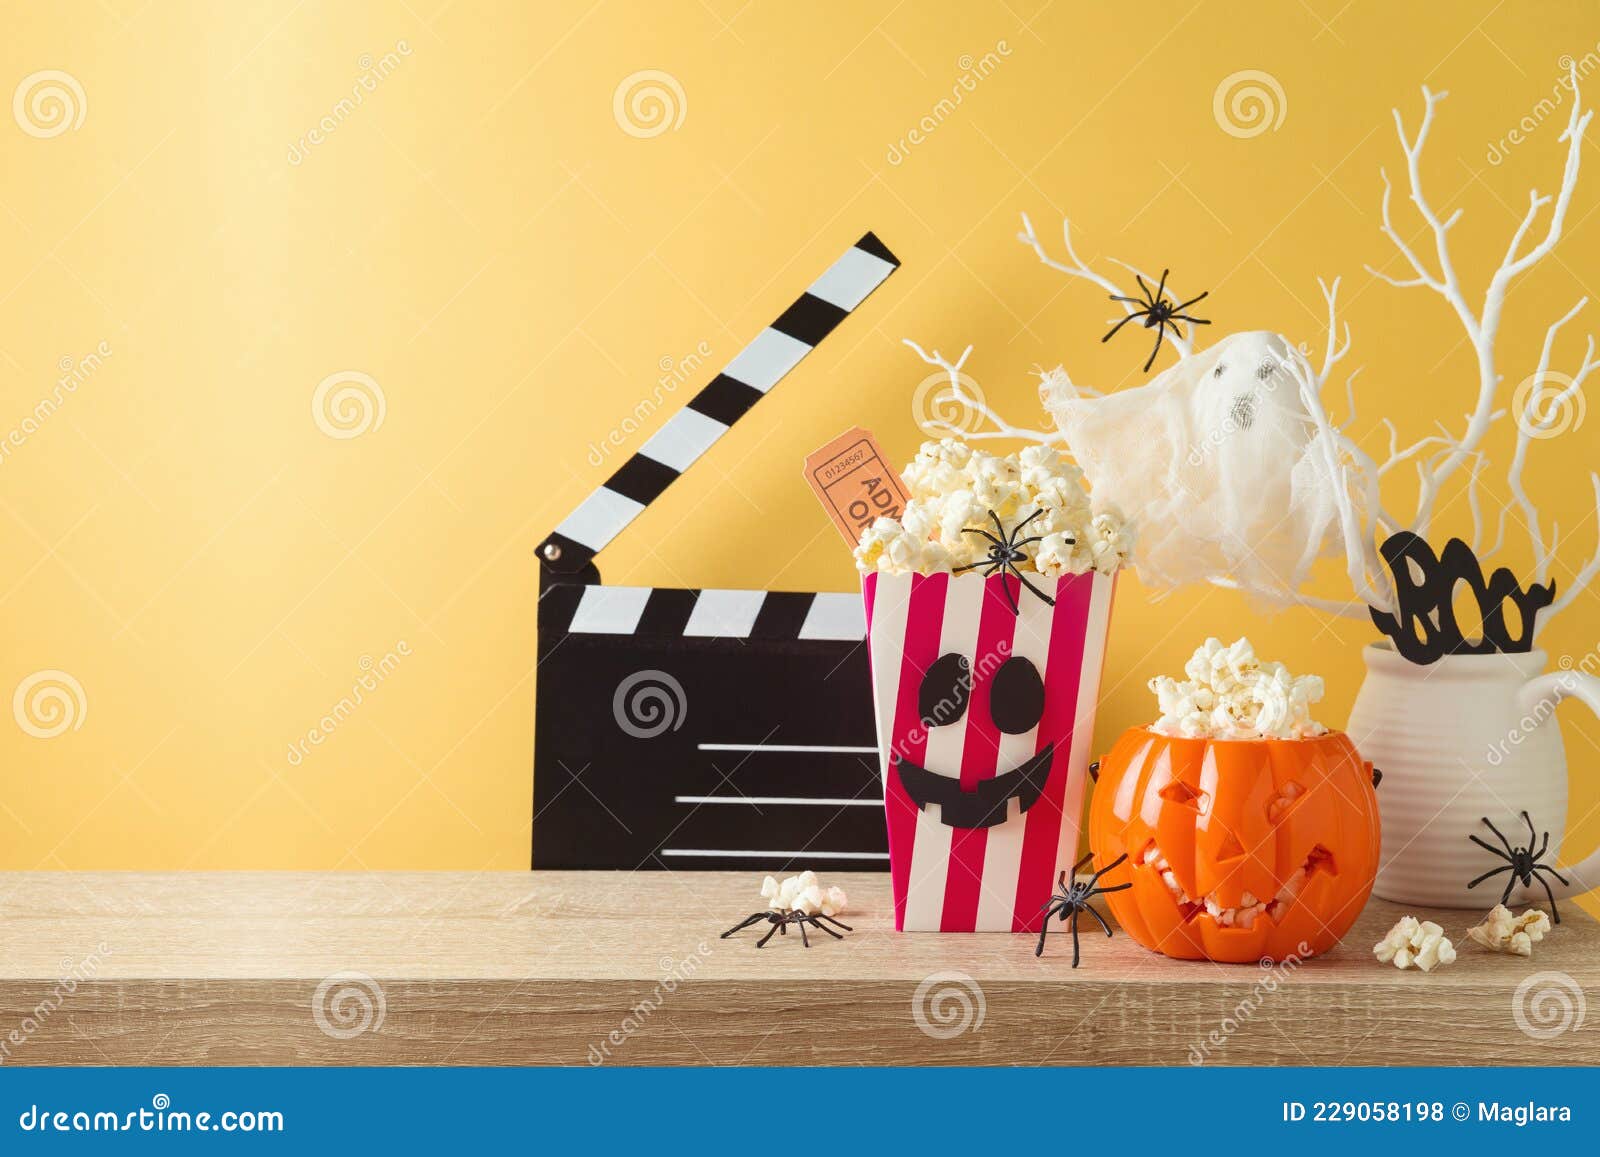 Lariteratura: [FILMES] Filmes para assistir no Halloween